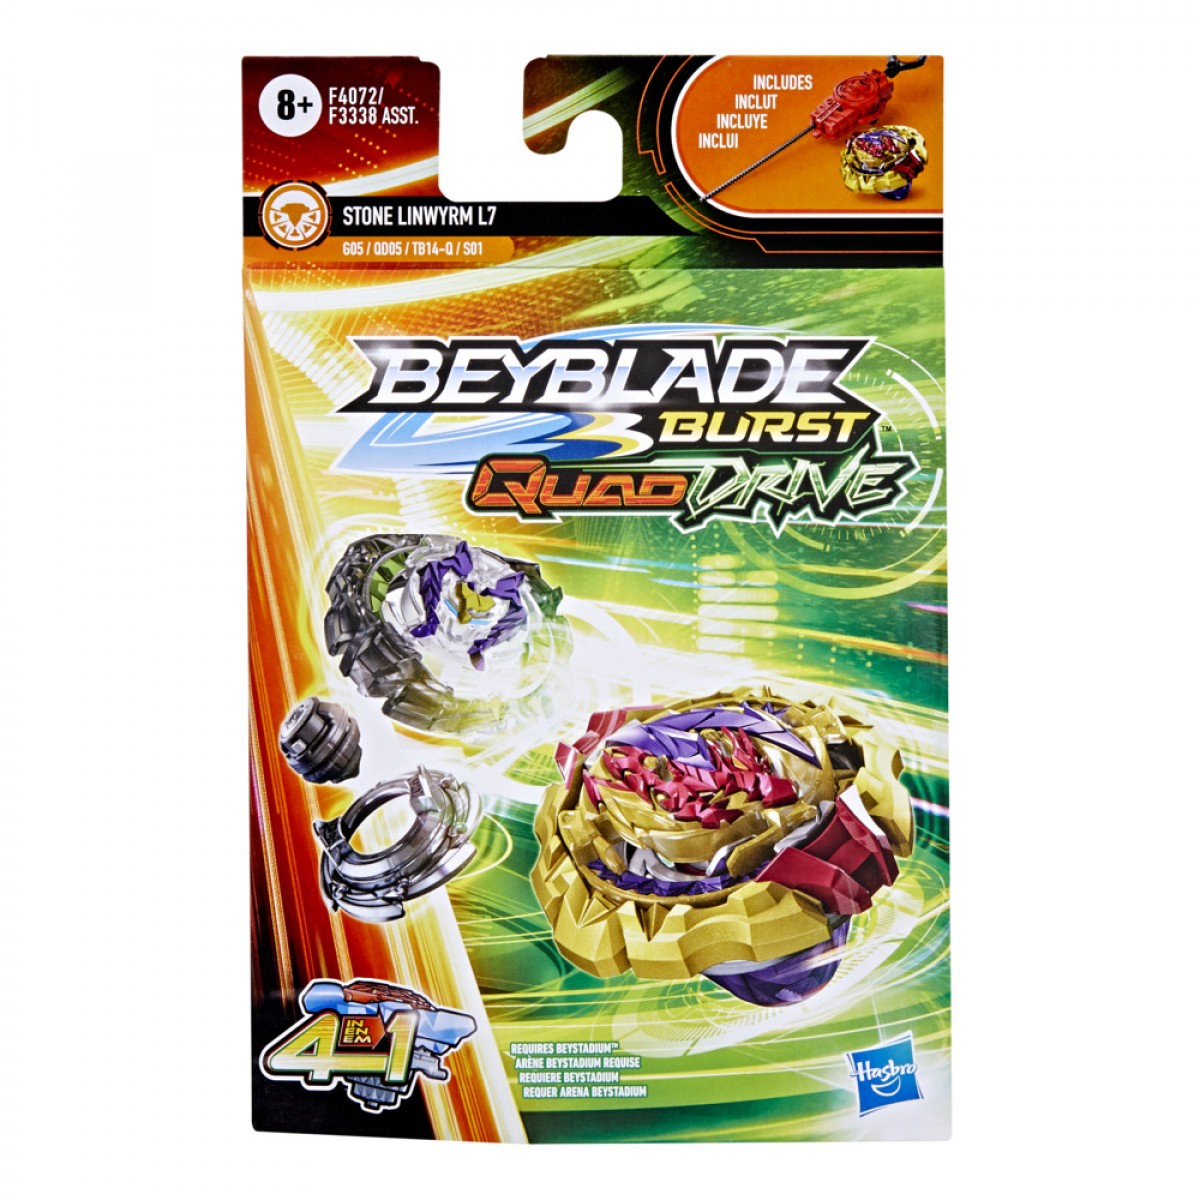 Beyblade Burst Quaddrive Stone Linwyrm L7 Spinning Top Starter Pack, 8Yrs+